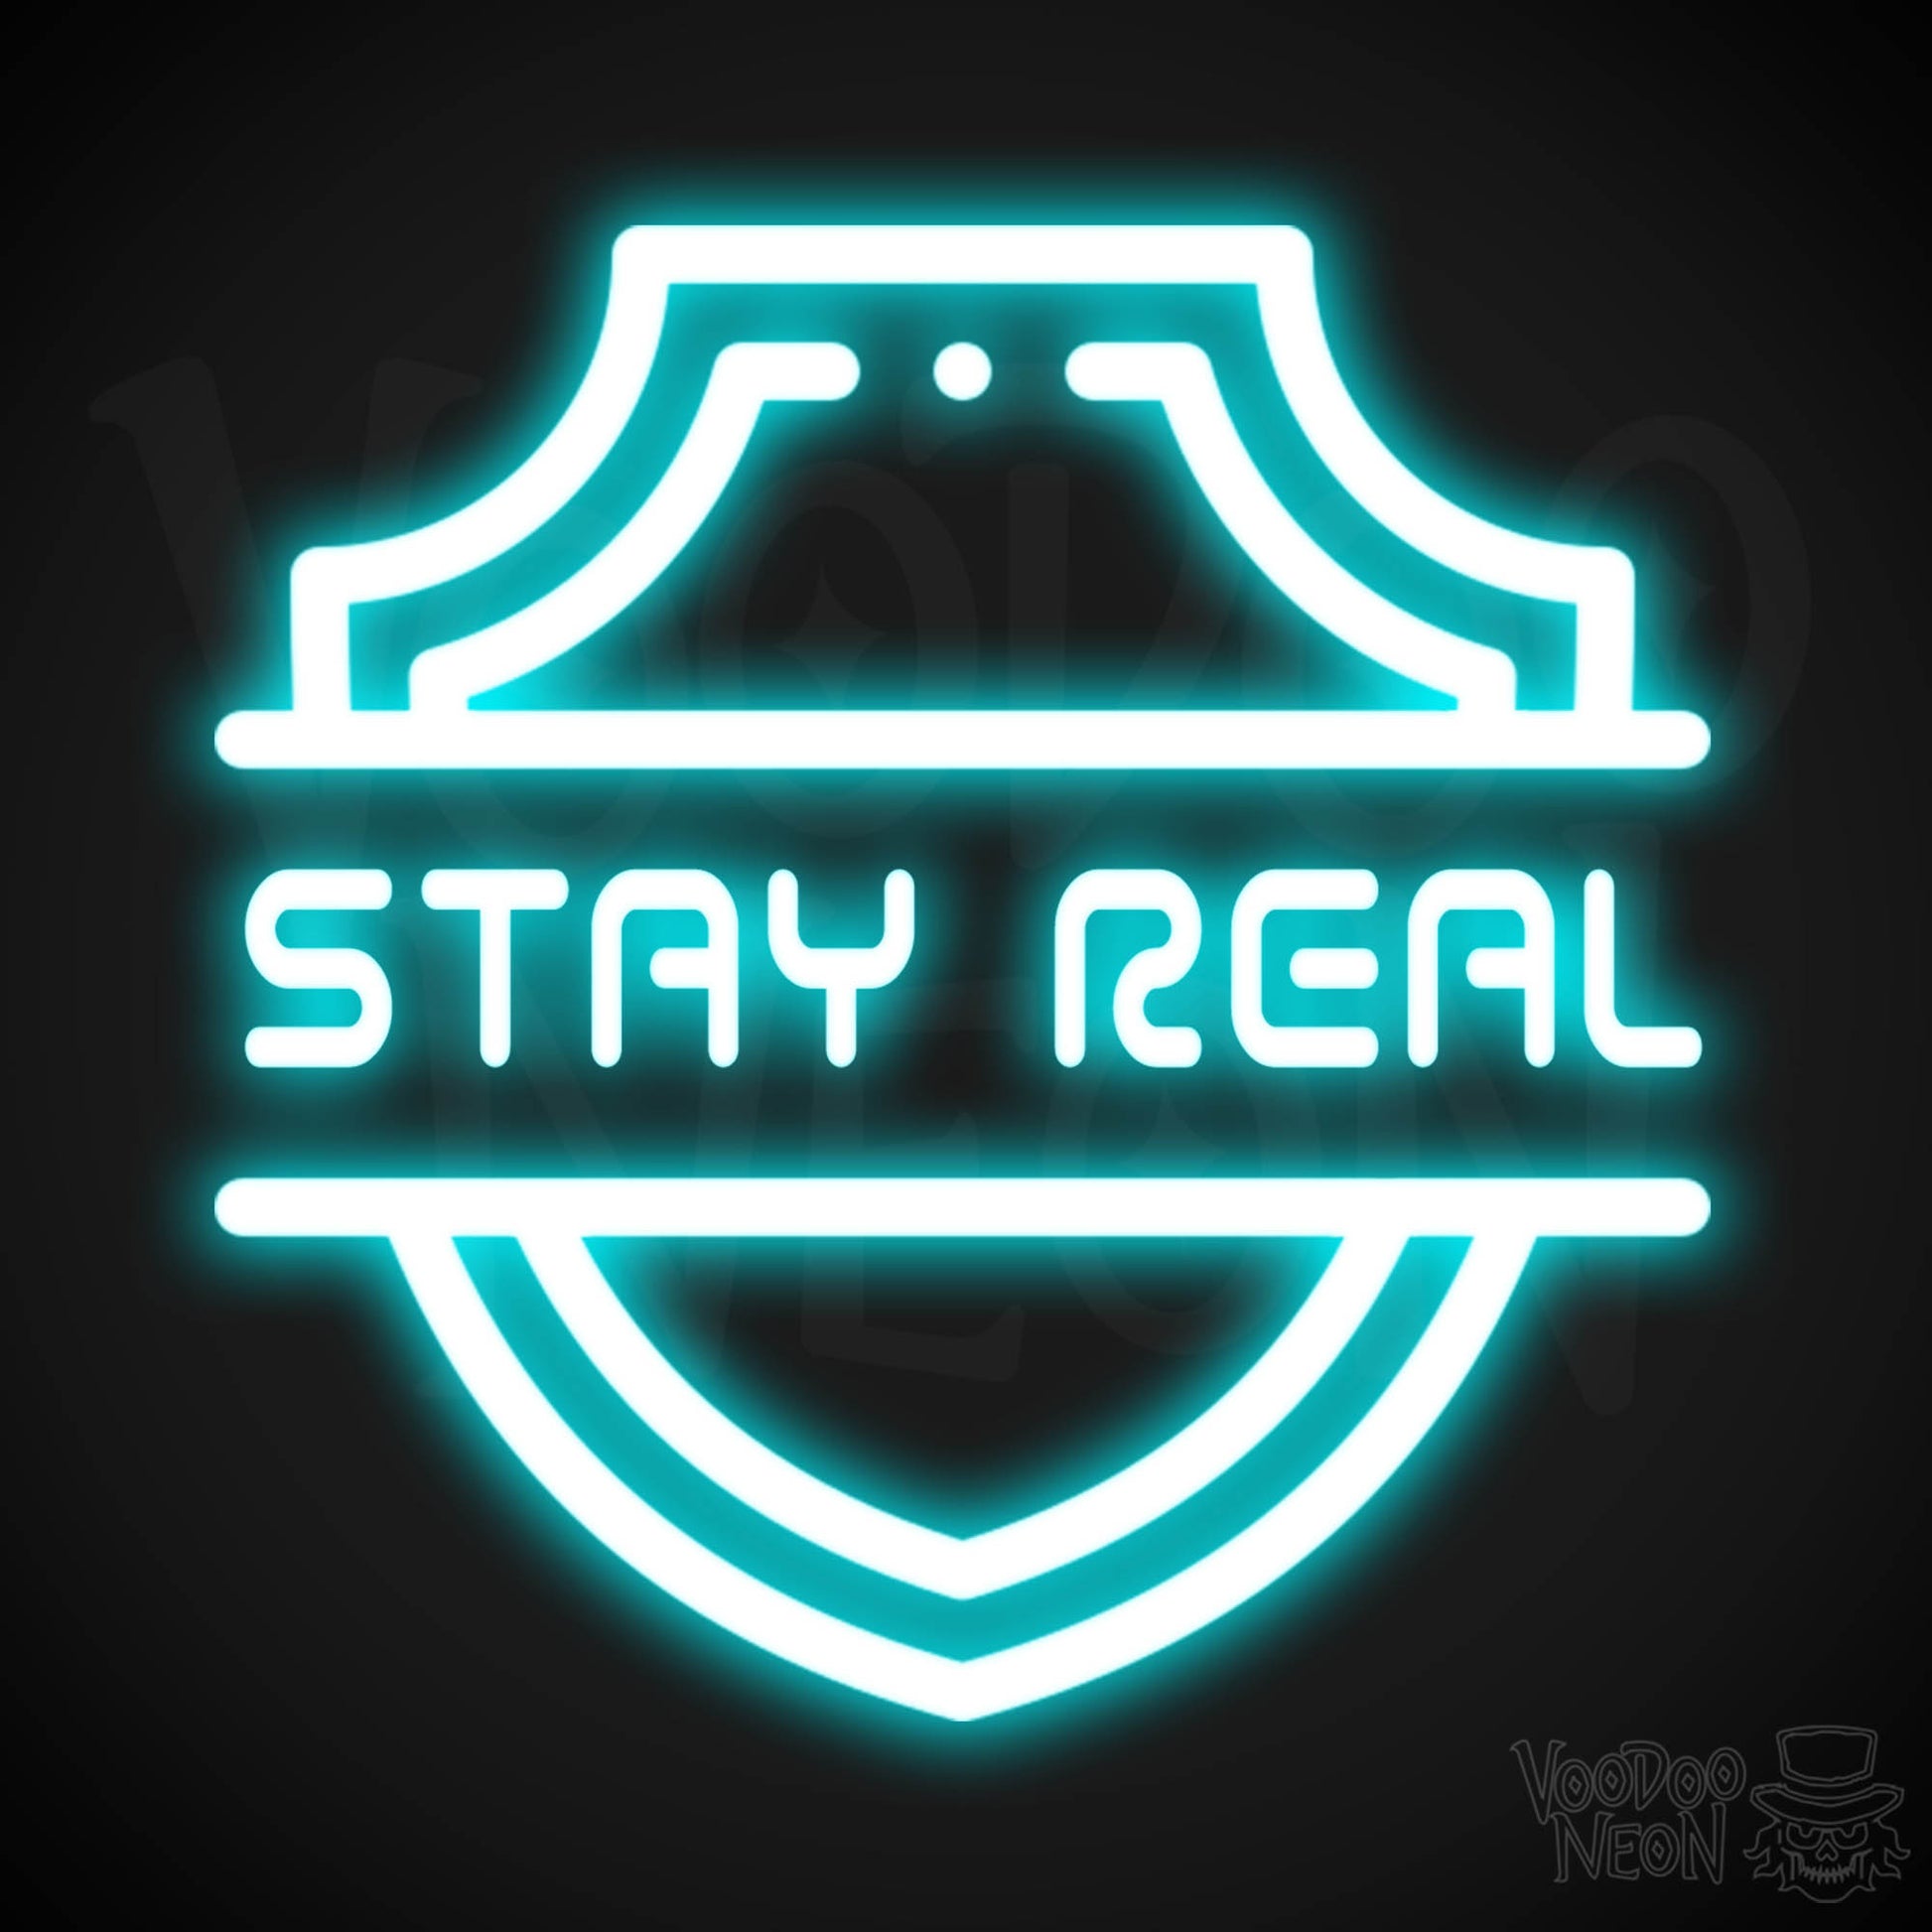 Stay Real Neon Sign - Neon Stay Real Sign - Neon Wall Art - Color Ice Blue